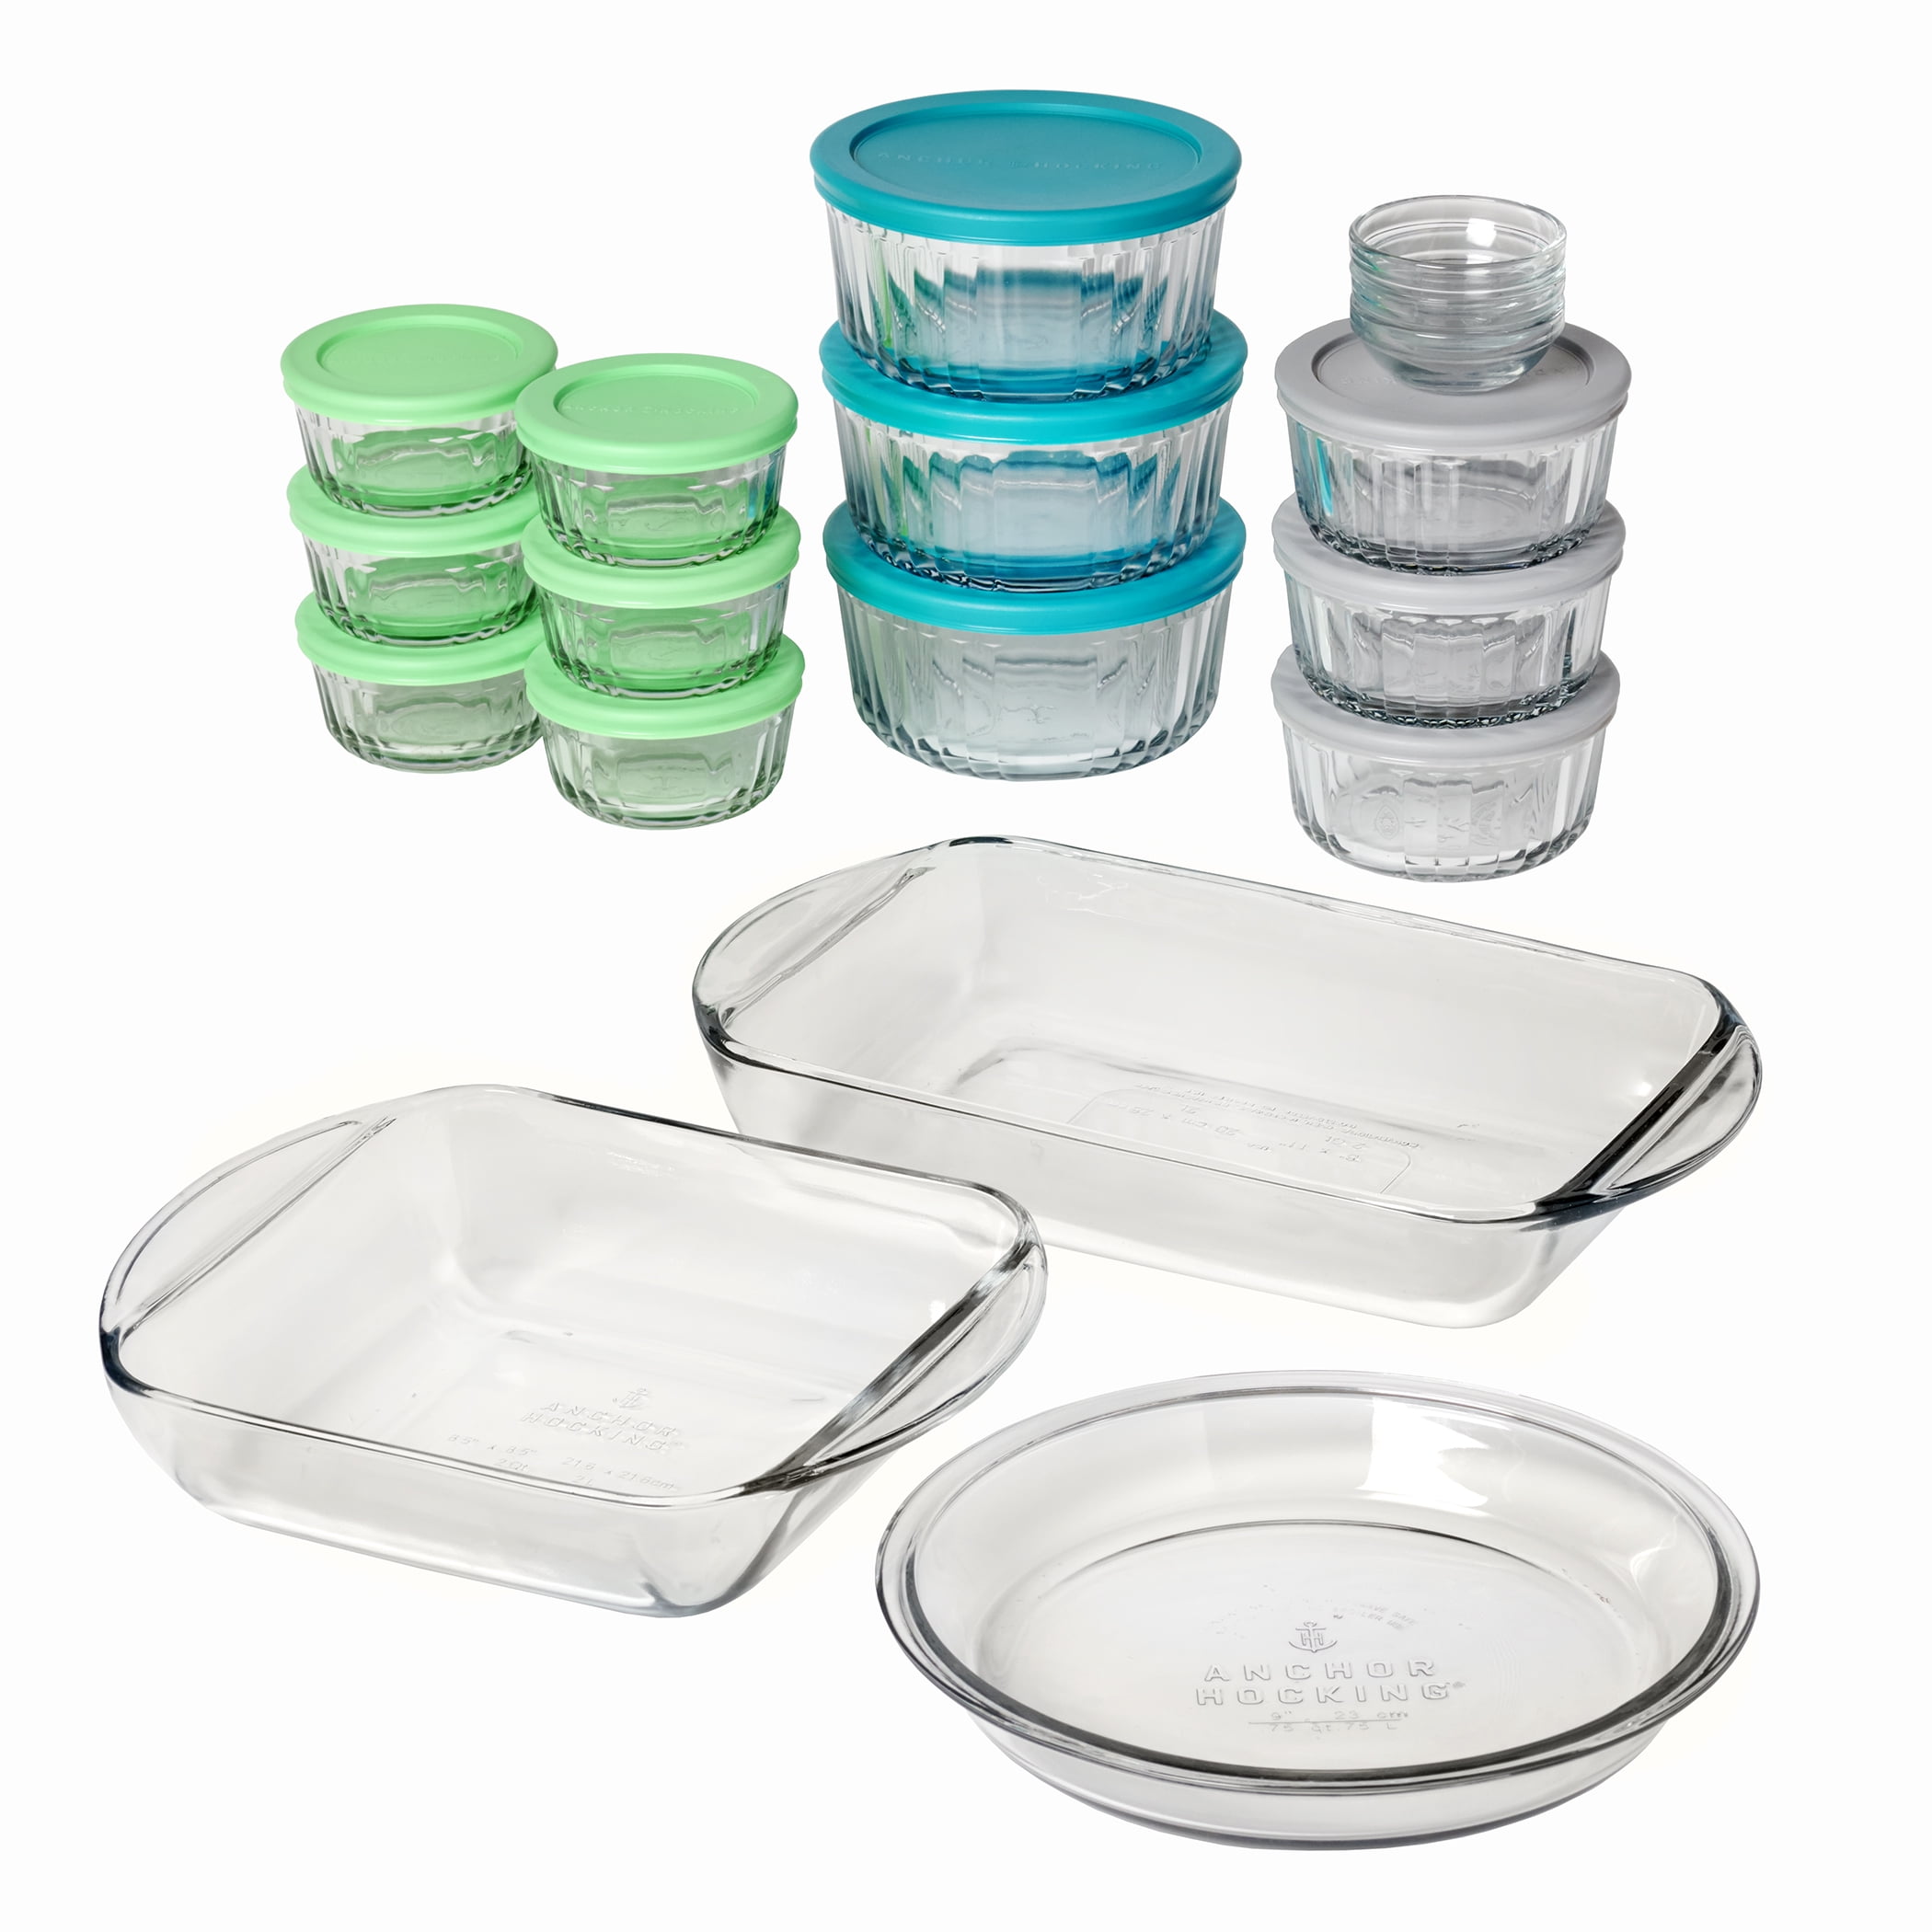 Anchor Hocking 10-pc. Round Meal Planning Glass Food Storage Set